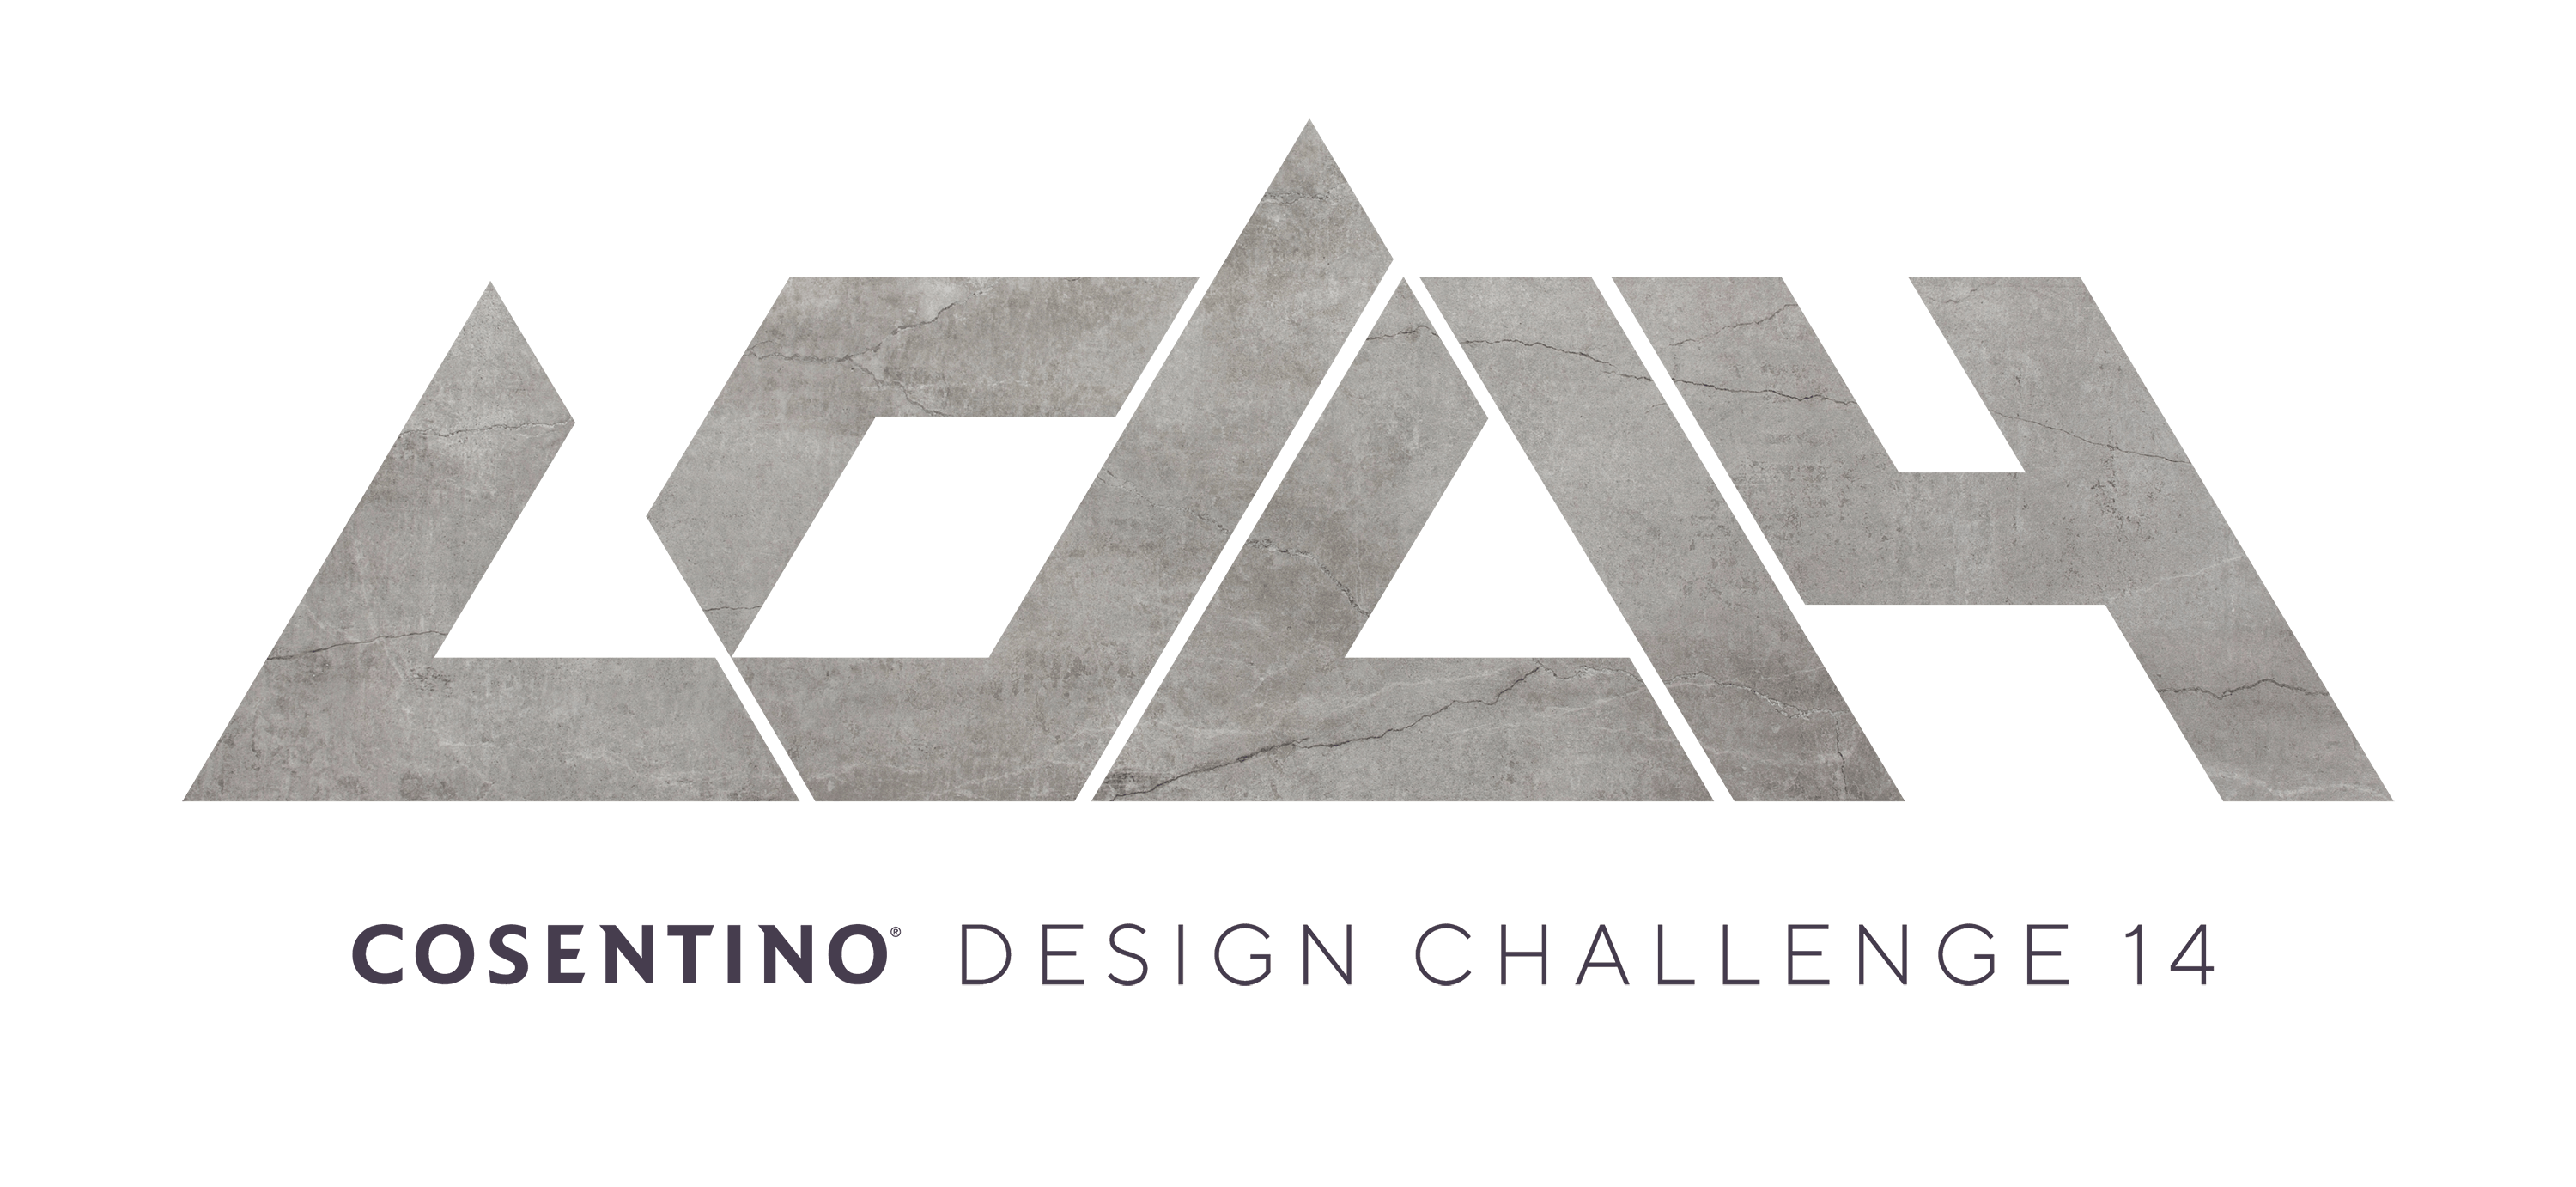 Cosentino Design Challenge 14 anuncia vencedores